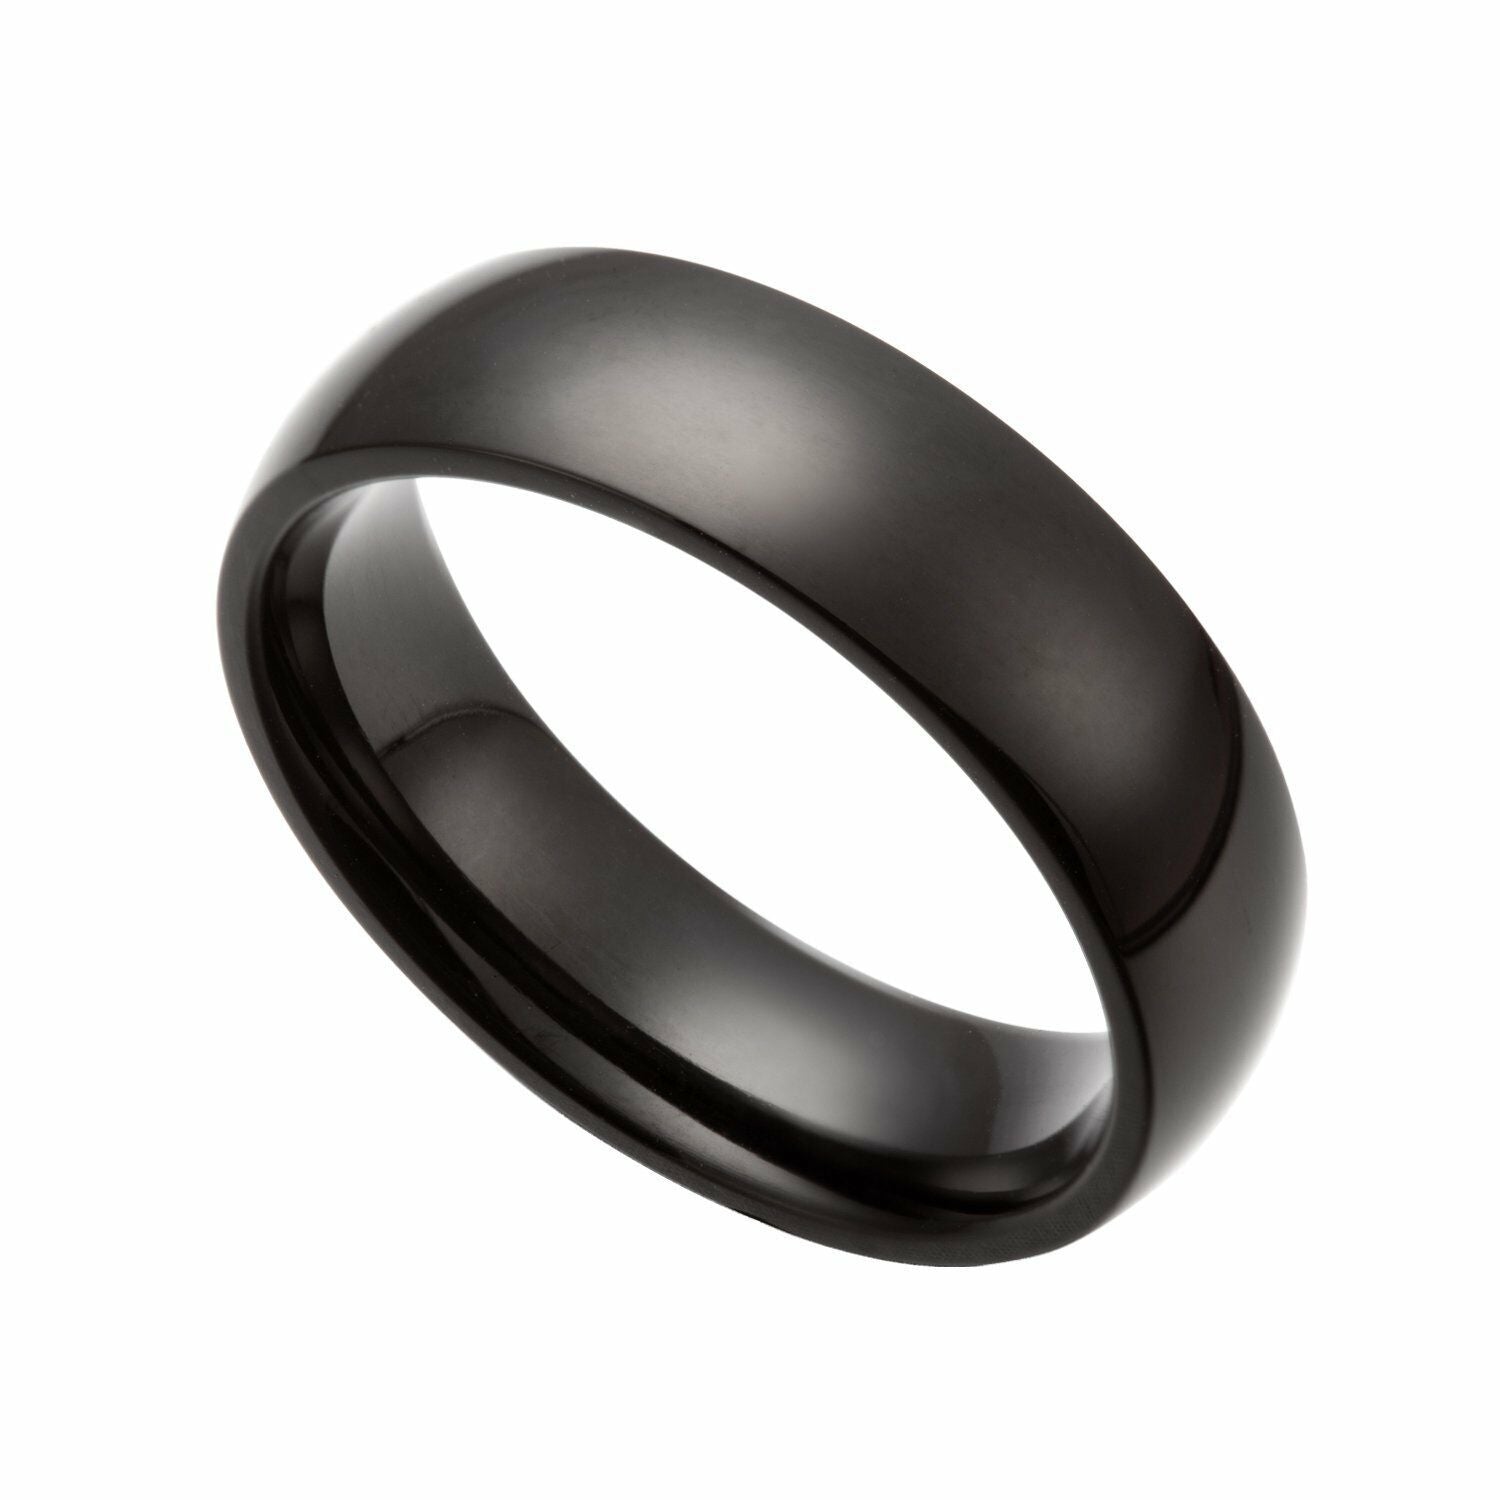 Unisex Plain Black Stainless Steel 5MM Fashion Wedding Band Ring Size 5-15 - Matties Modern Jewelry